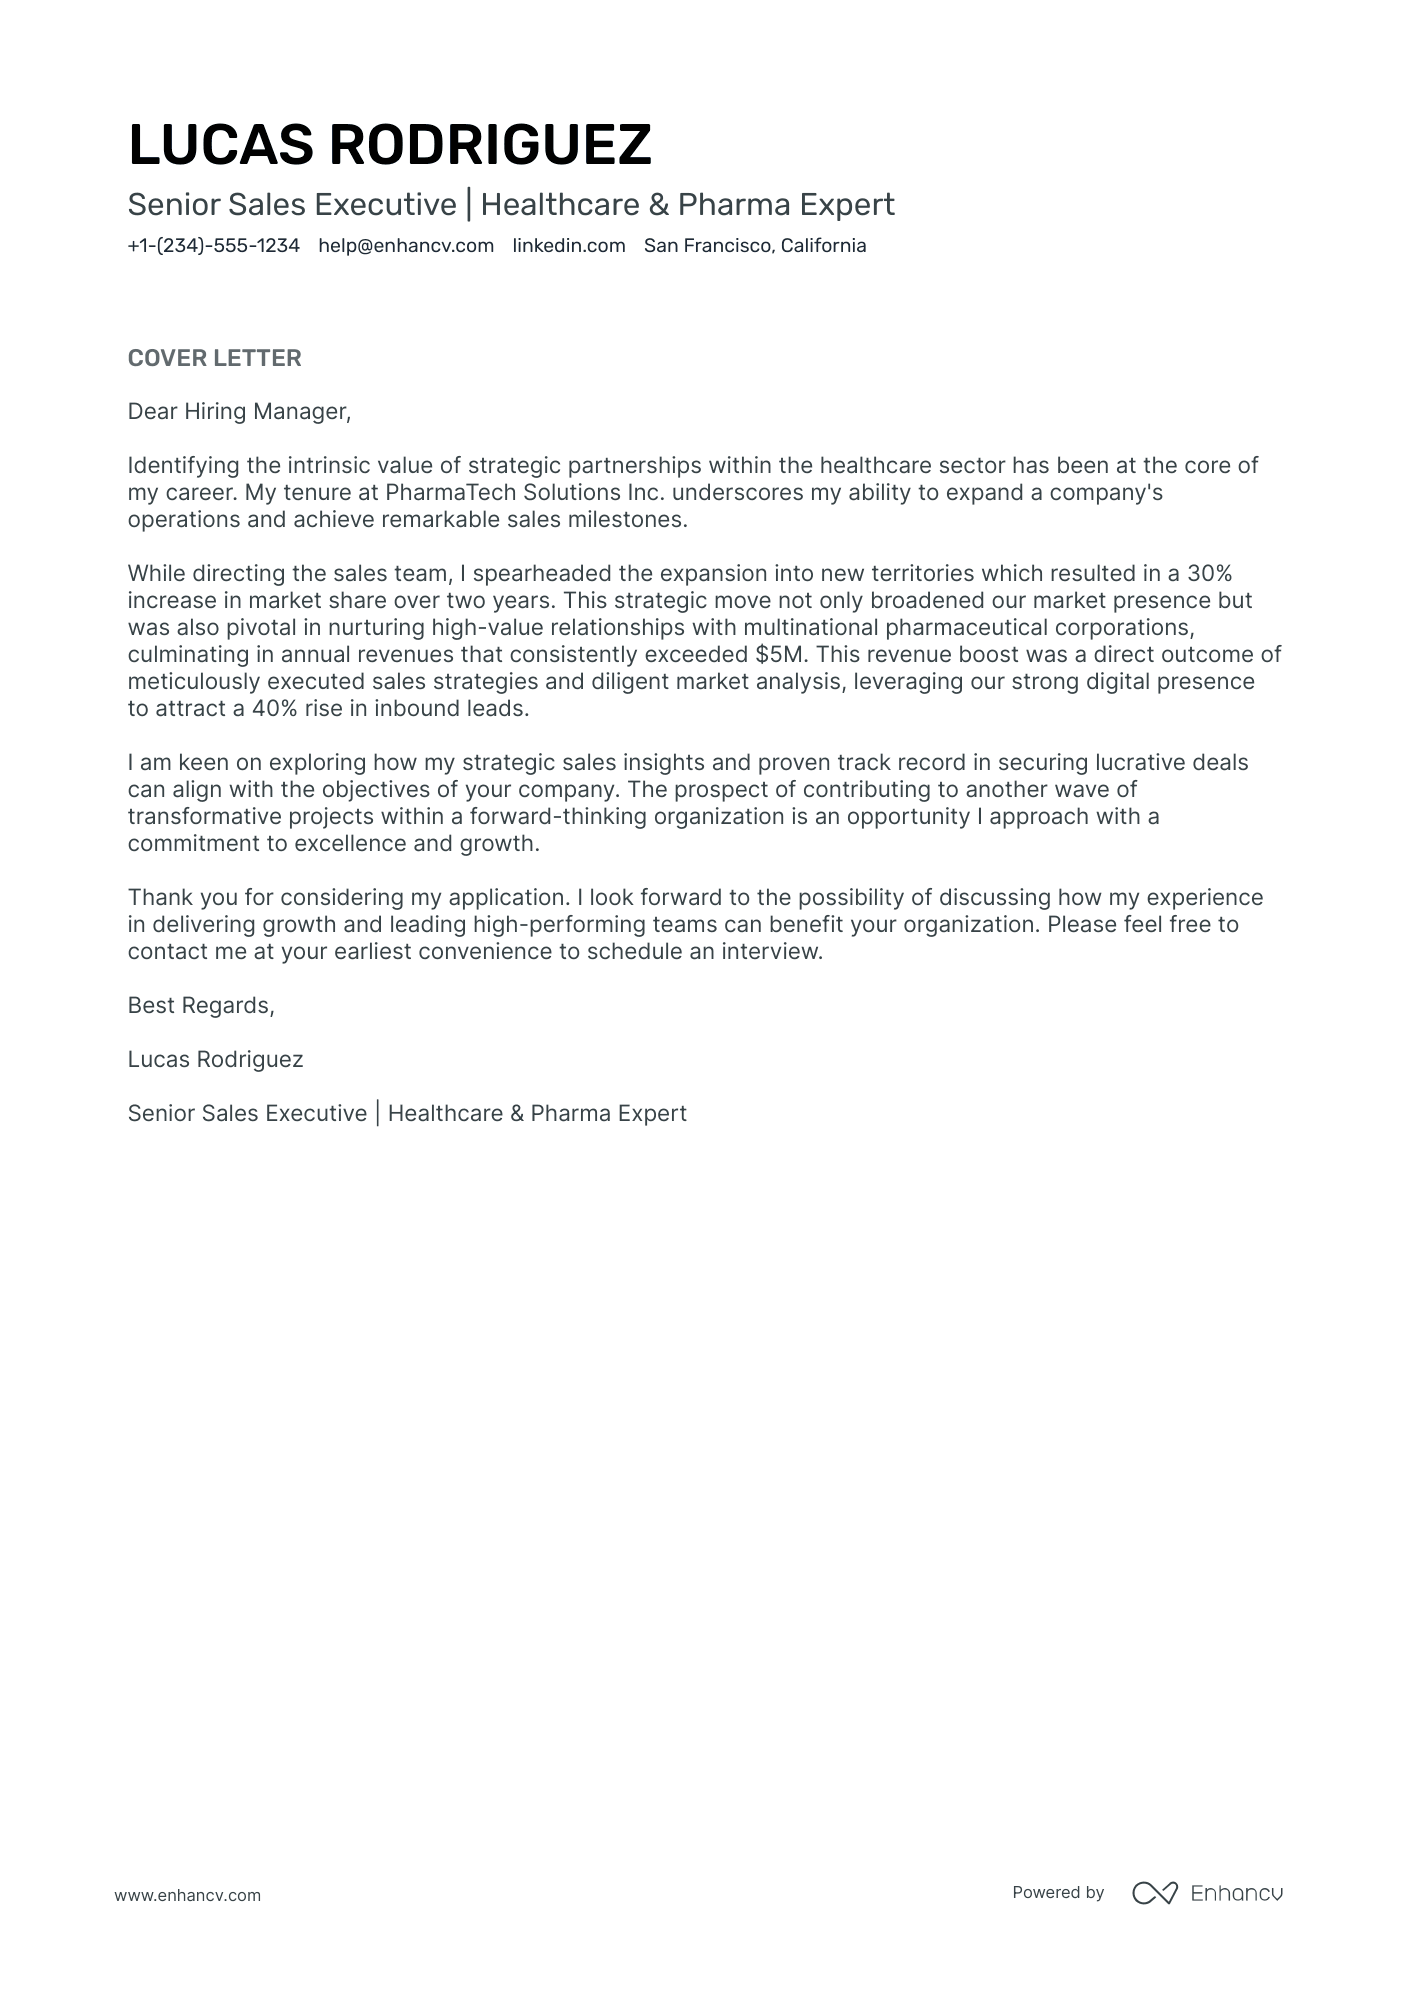 Senior Sales Manager cover letter